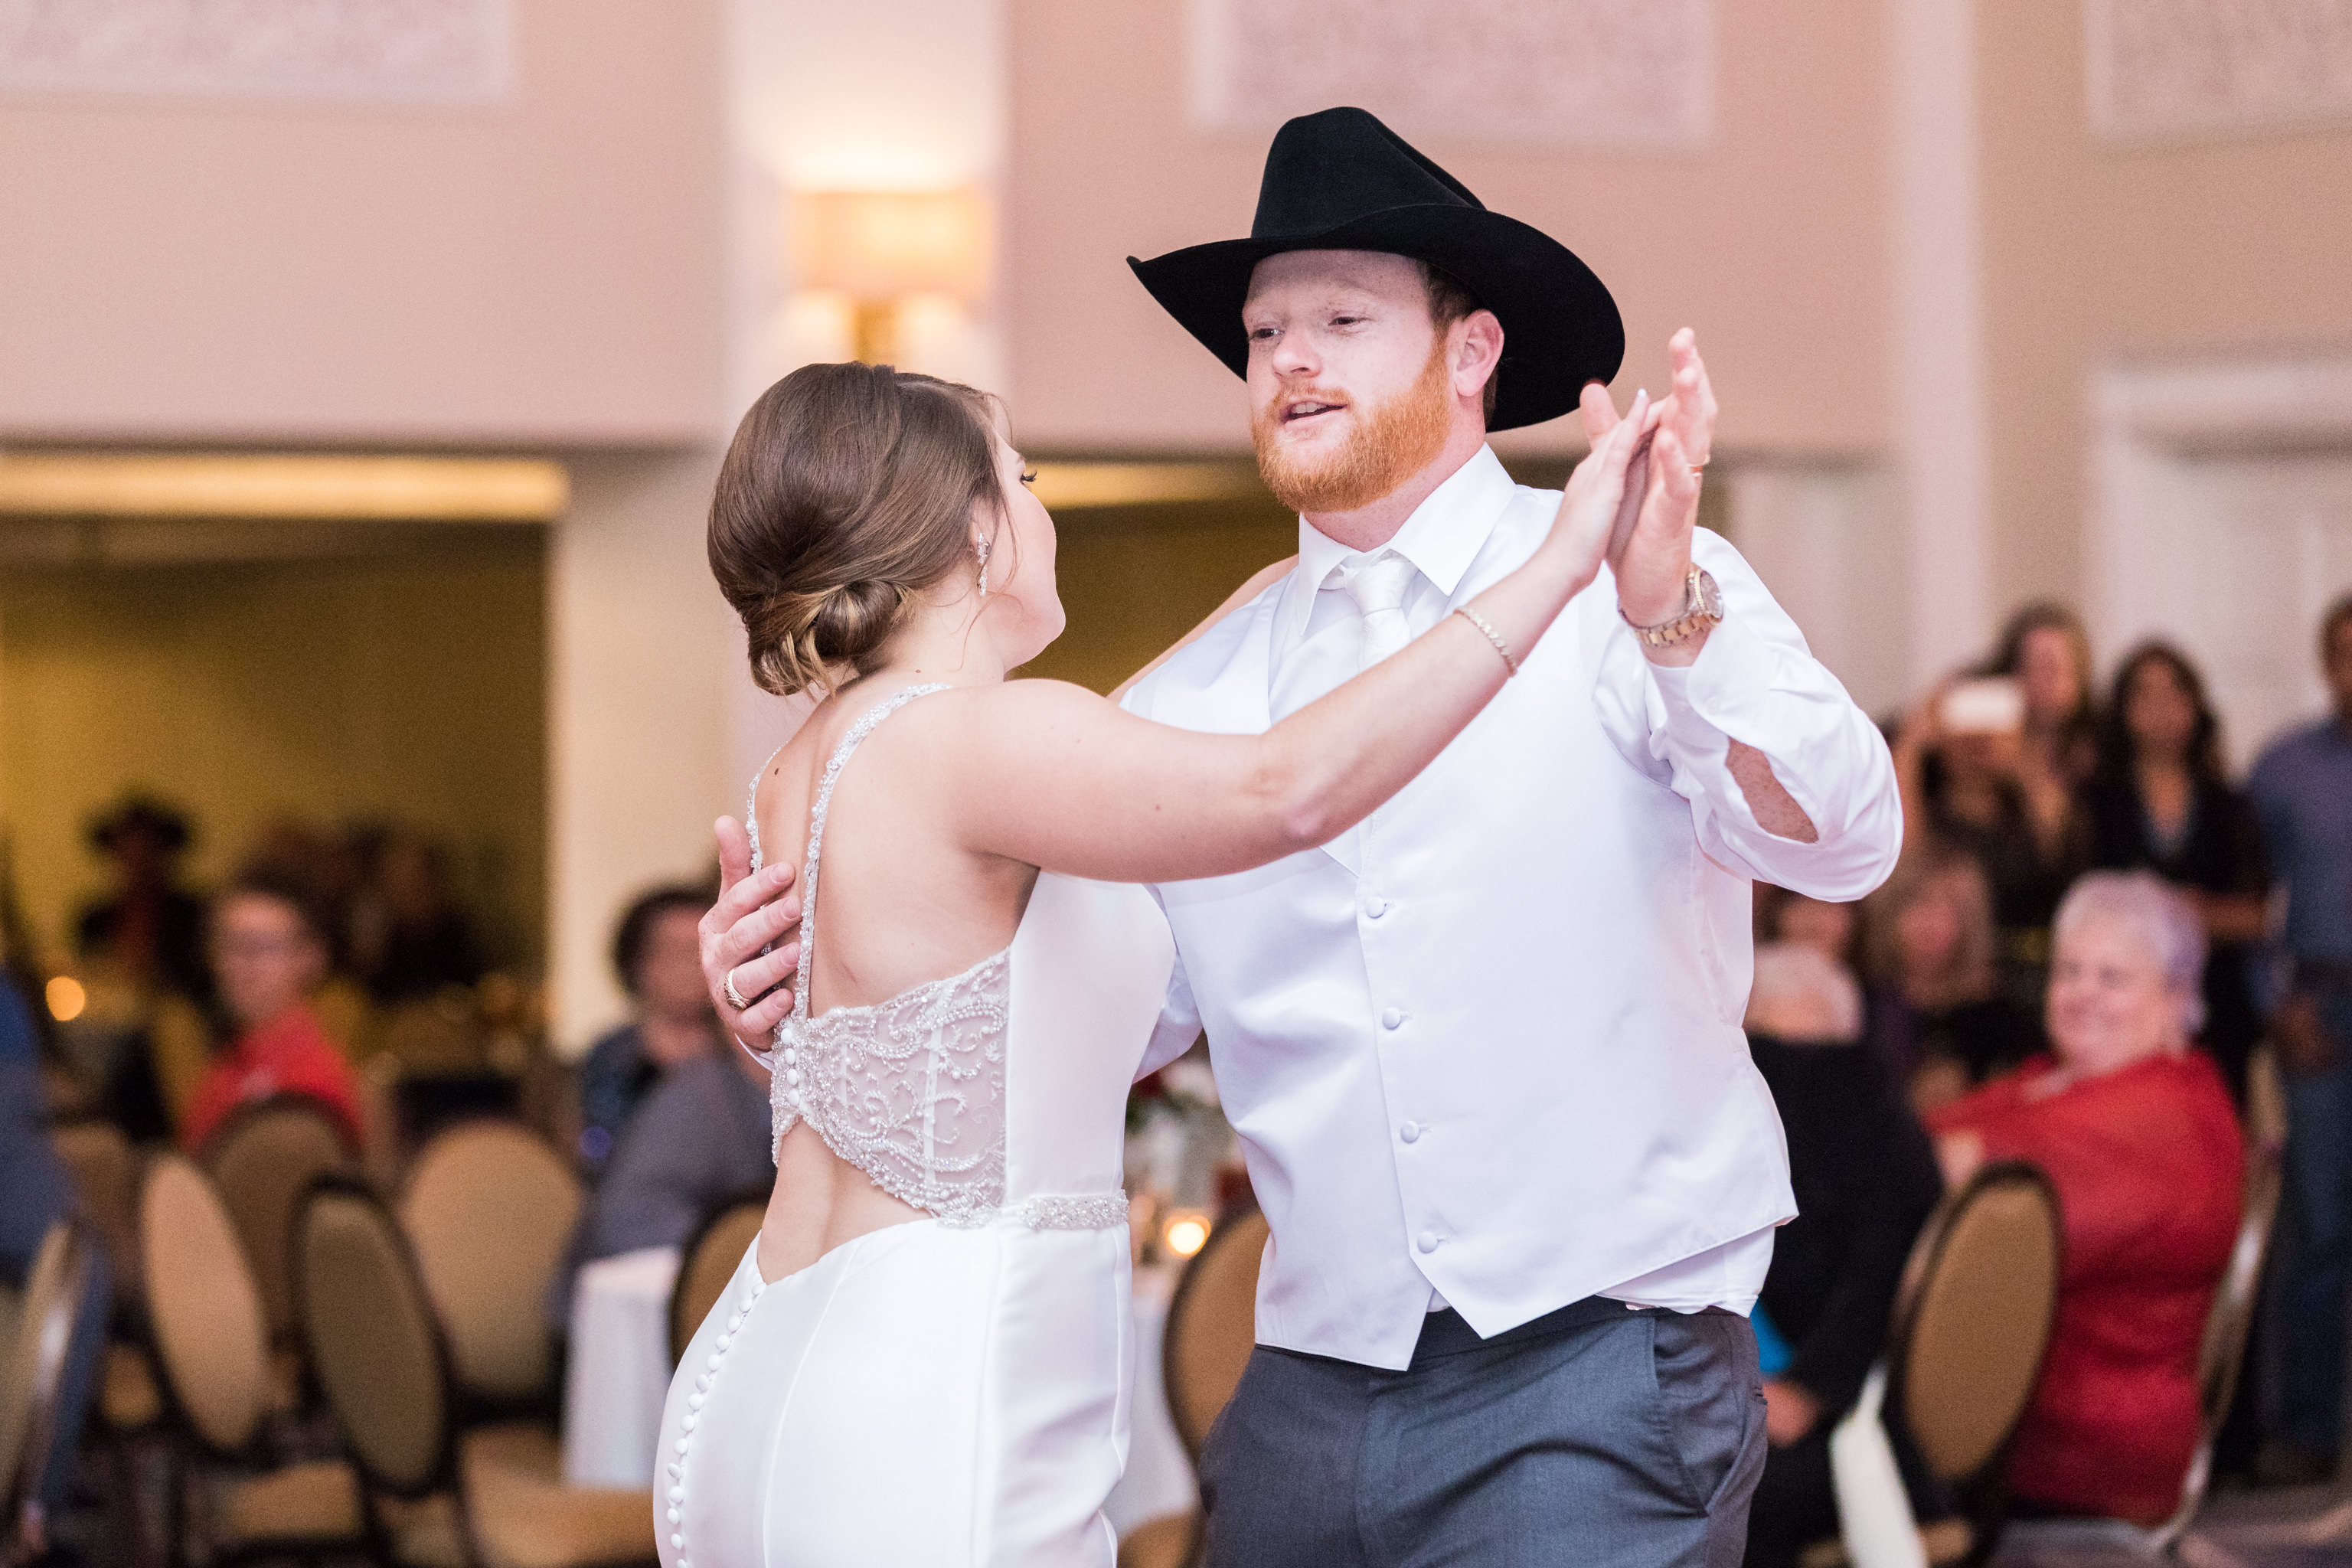 A Navy and Burgundy Wedding at Sheraton Gunter Hotel in San Antonio, TX by Dawn Elizabeth Studios, San Antonio Wedding Photographer